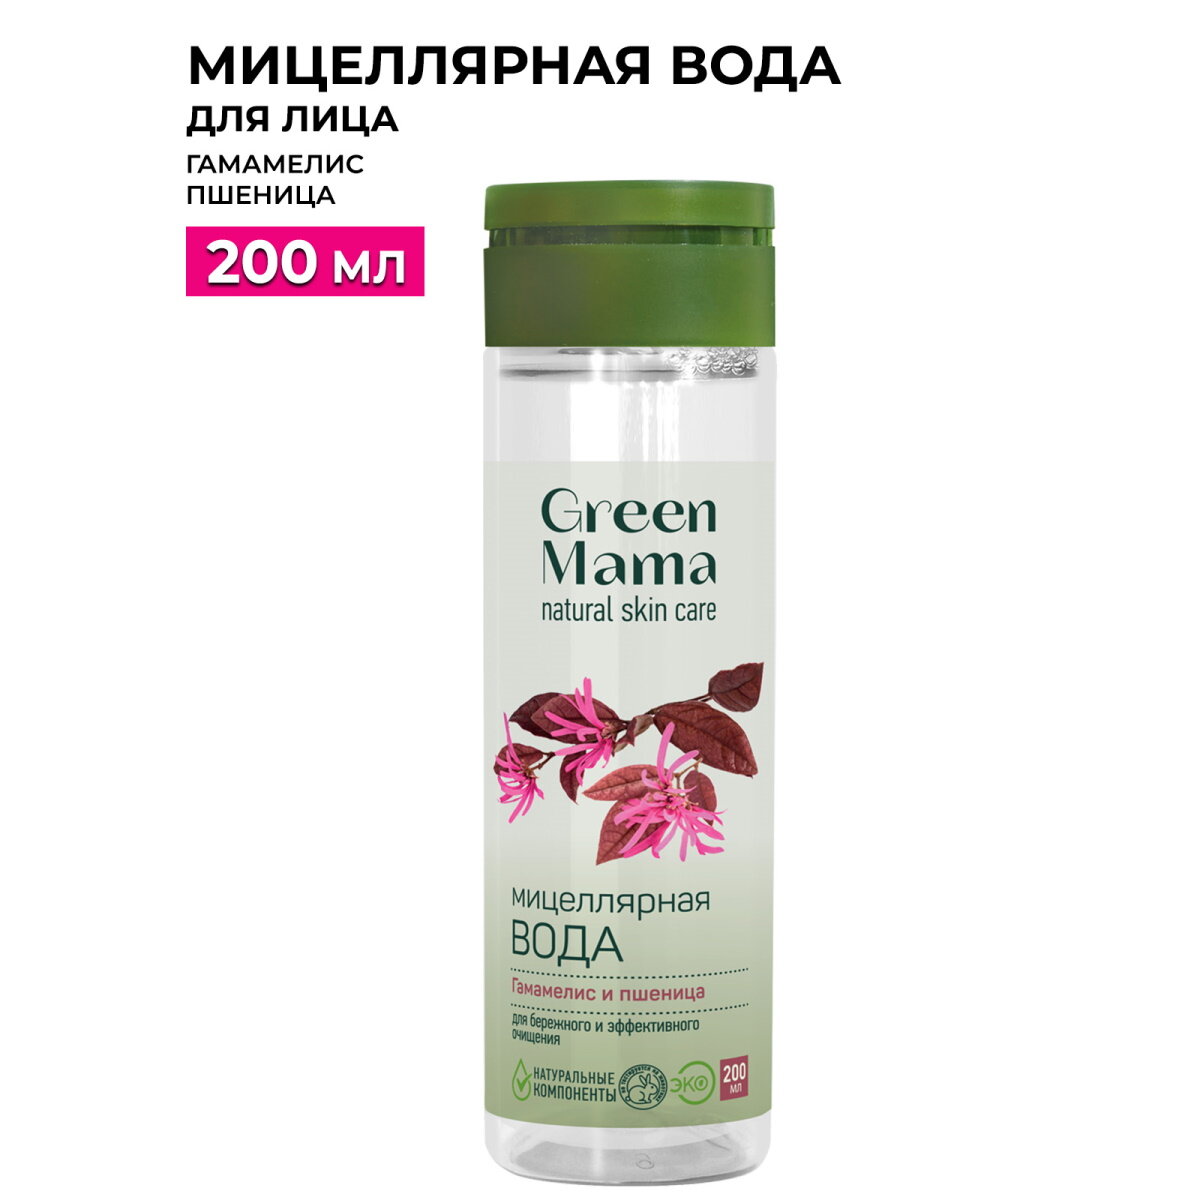 Мицеллярная вода Green Mama Green Nova MakeUp гамамелис и пшеница 200 мл